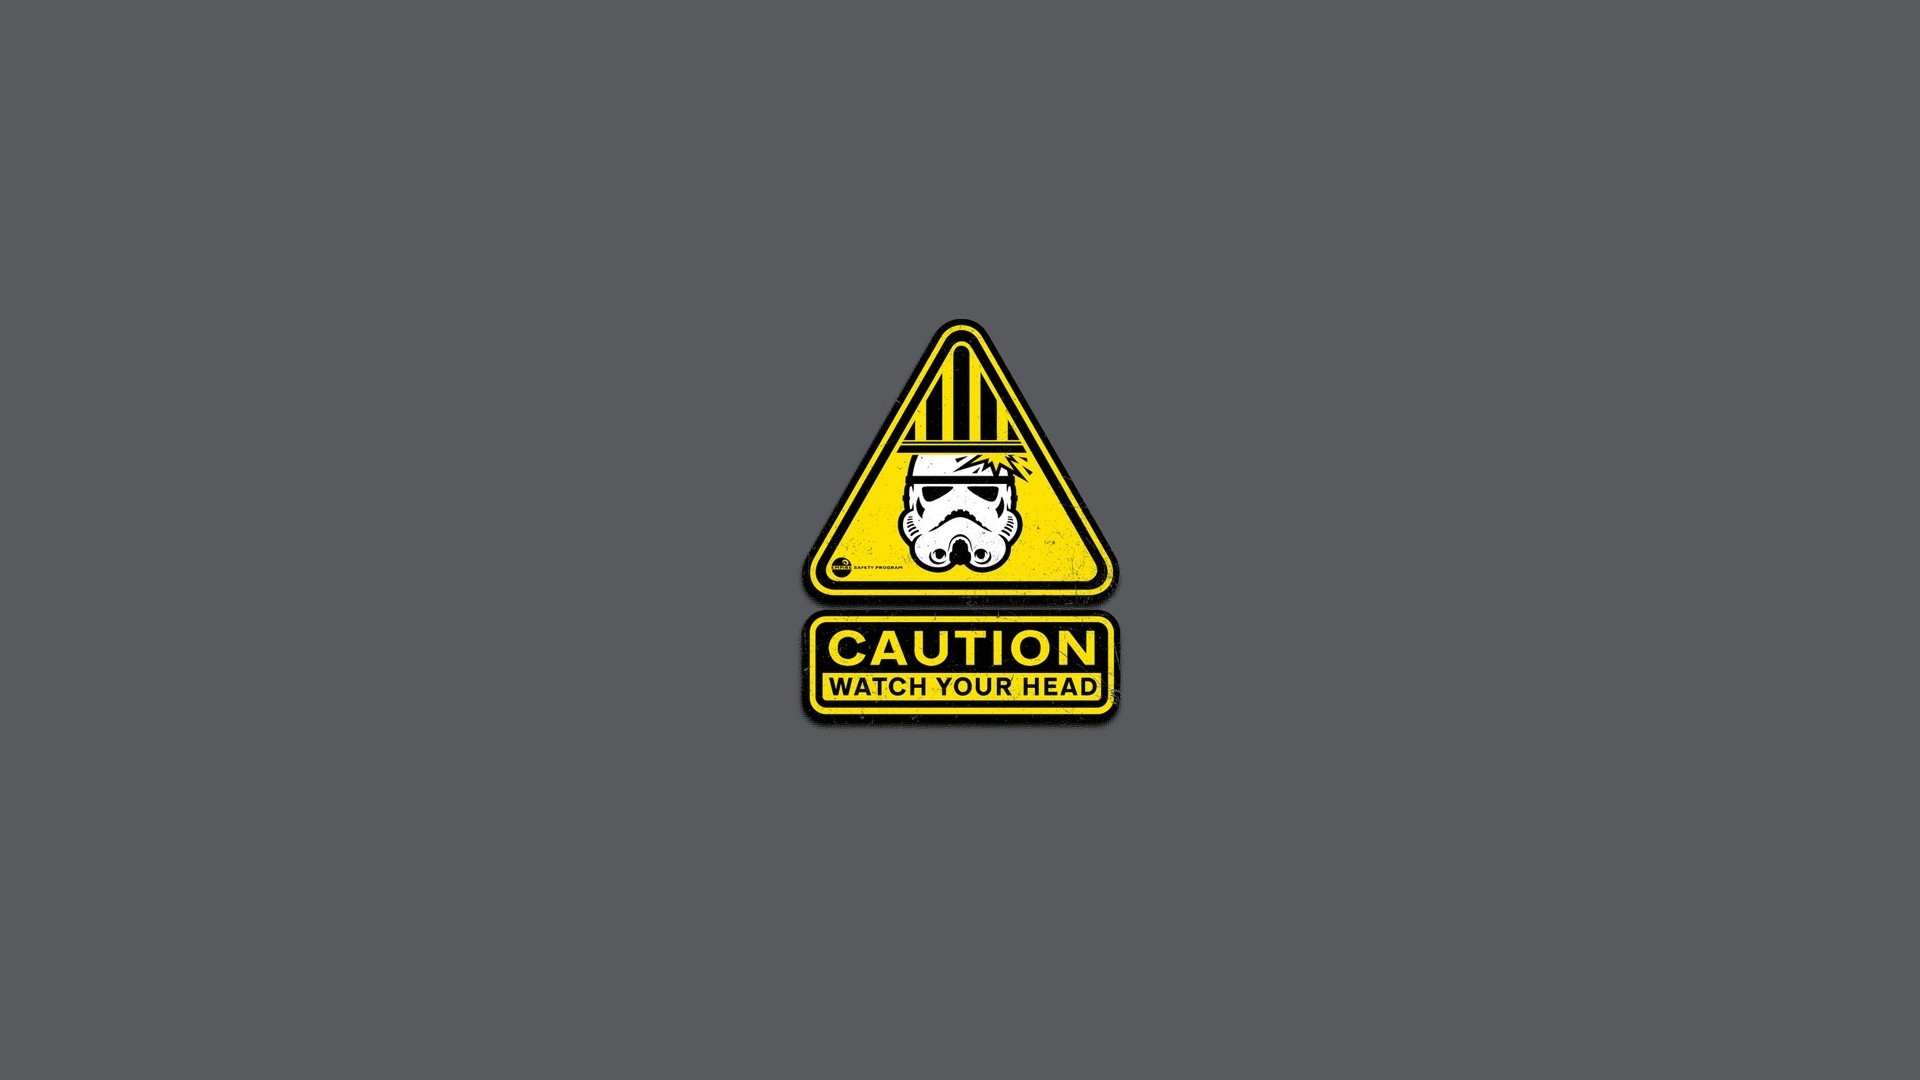 General 1920x1080 Star Wars minimalism humor sign stormtrooper helmet science fiction Star Wars Humor simple background gray background